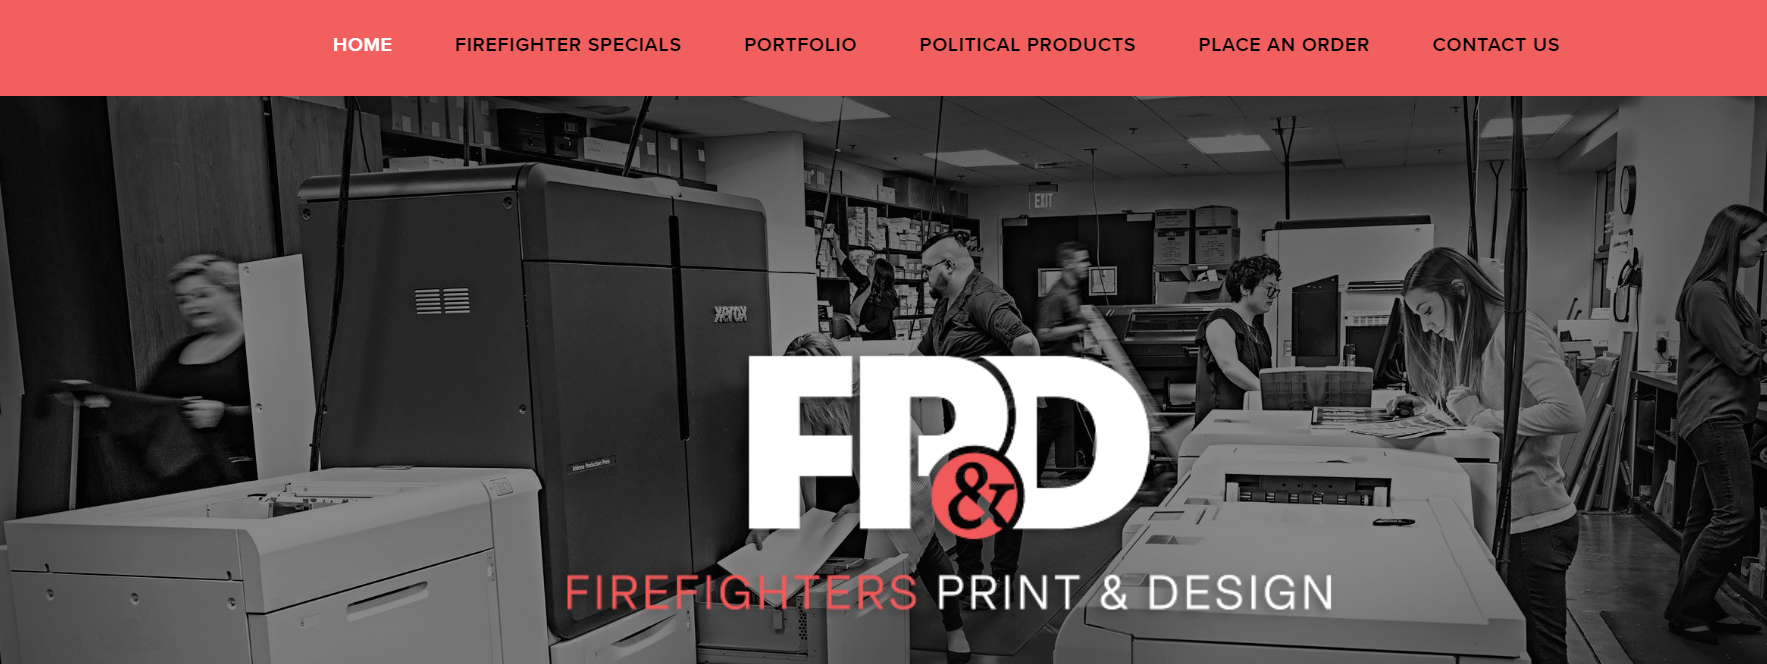 Firefighters Print & Design